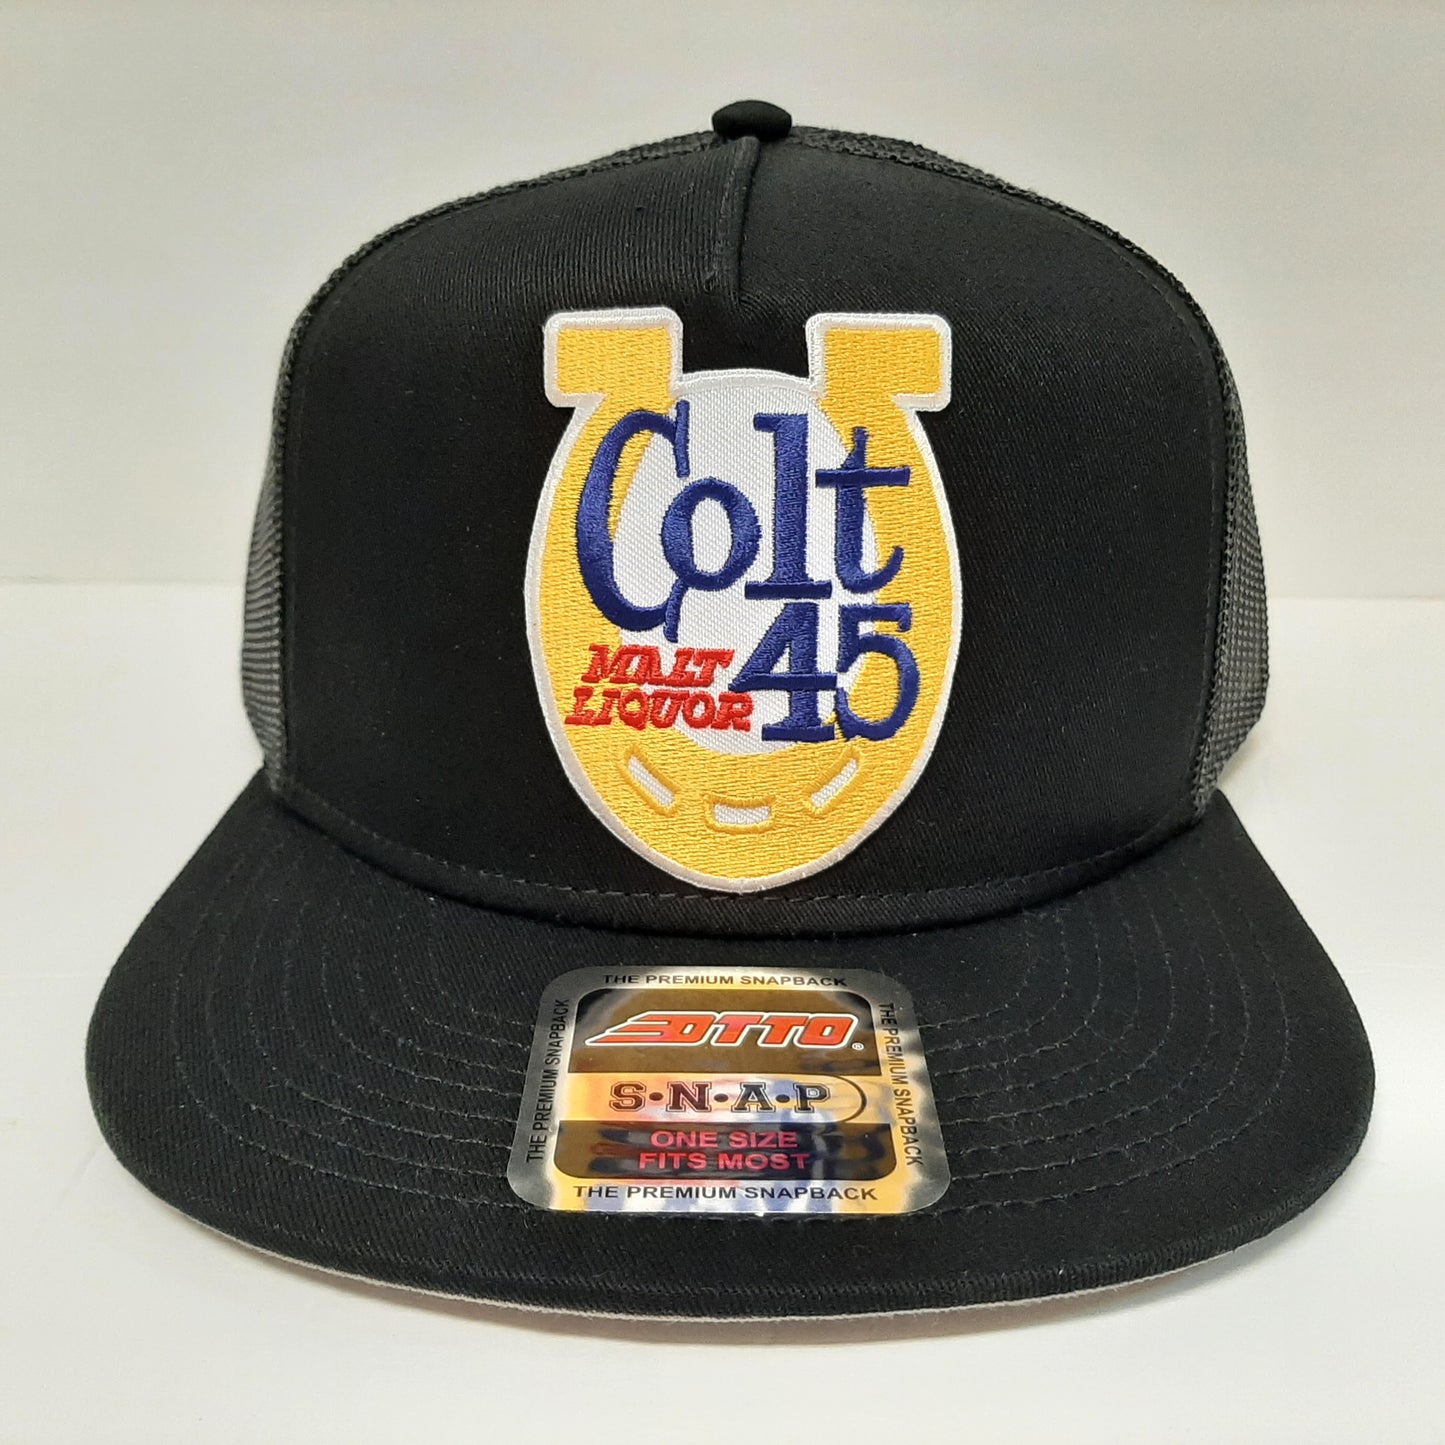 Colt 45 Malt Liquor Beer Embroidered Patch Flat Bill Snapback Mesh Hat Cap OTTO